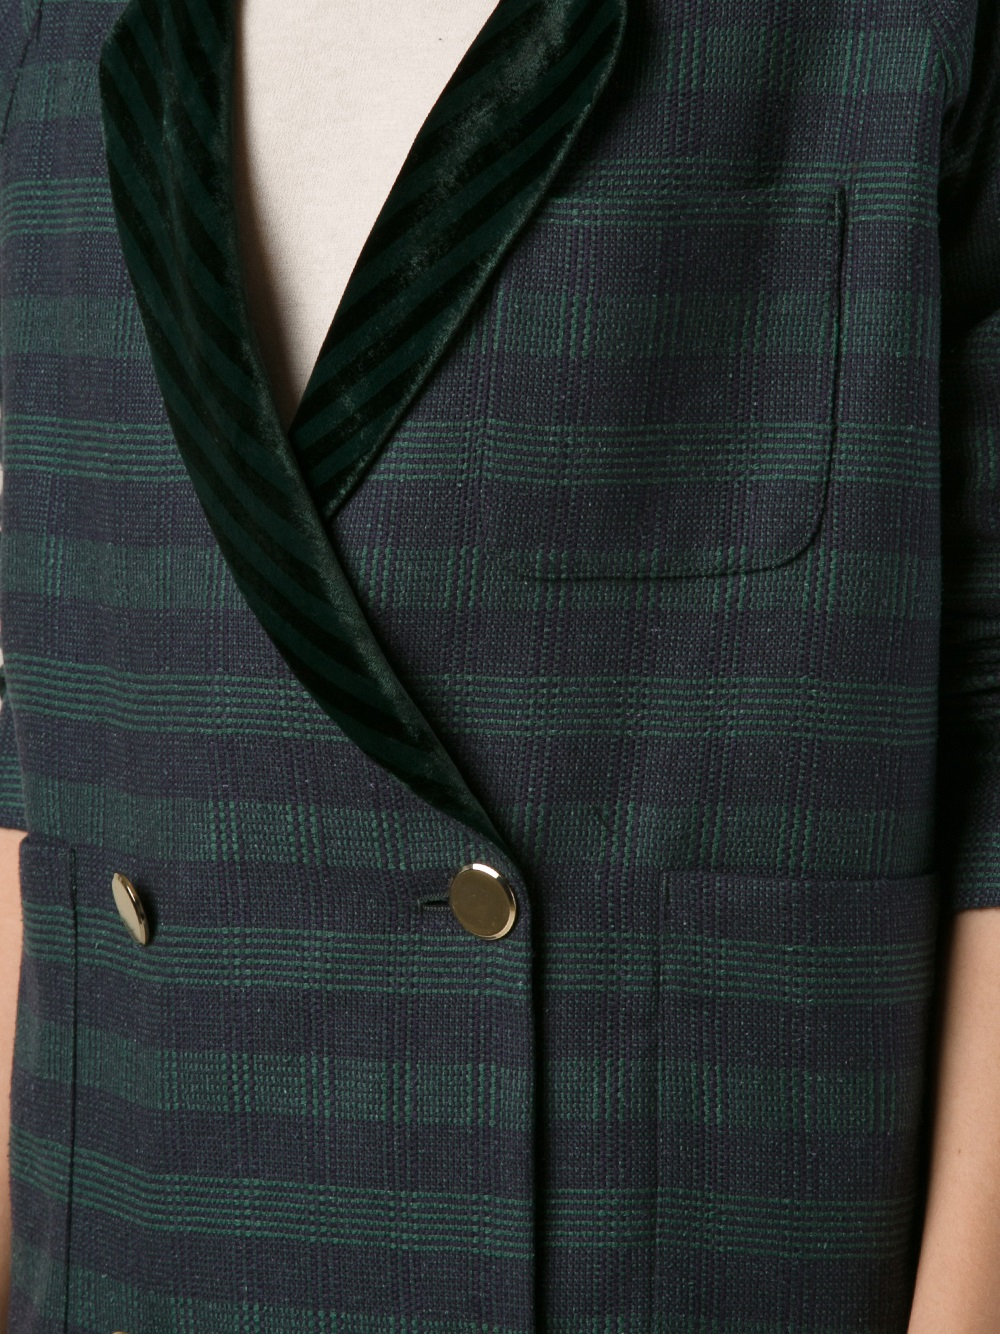 Golden Goose Deluxe Brand Ottavia Jacket in Green - Lyst